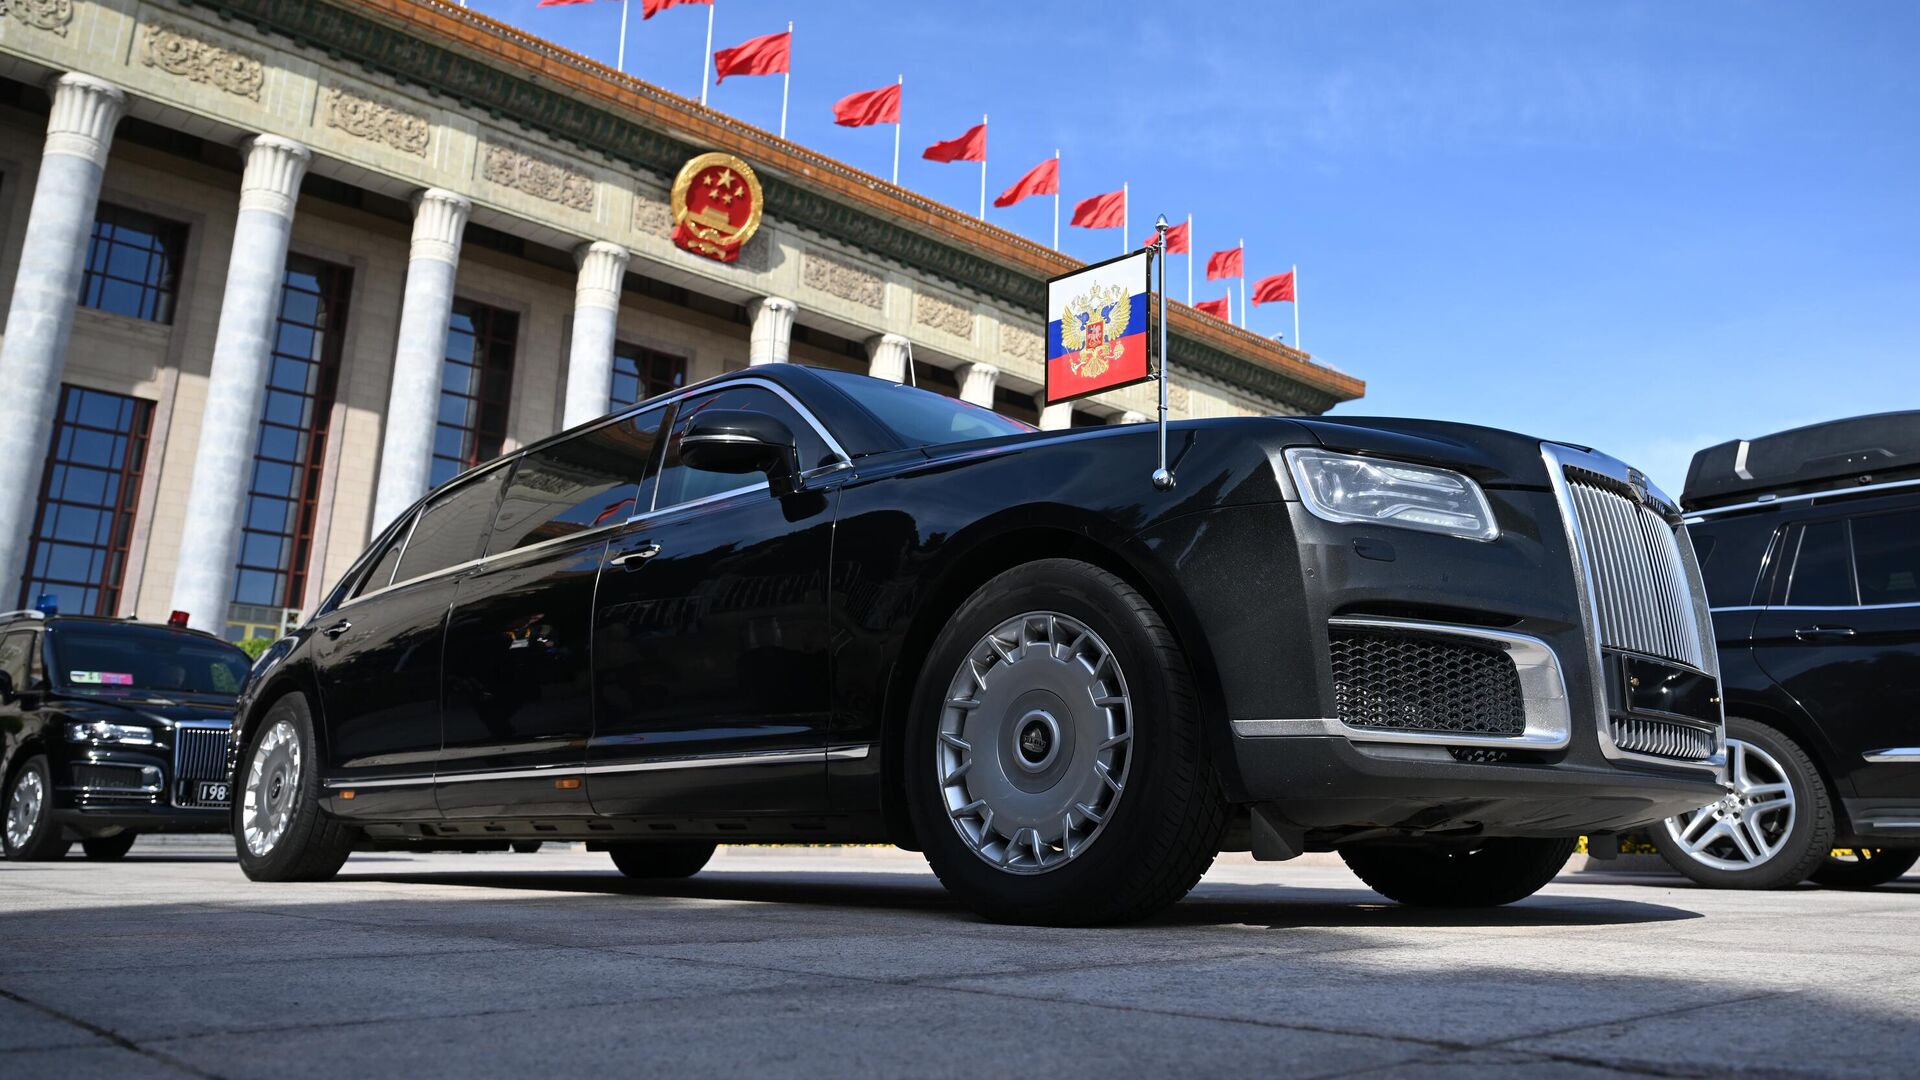 Автомобиль Аурус кортежа президента РФ Владимира Путина перед Домом народных собраний в Пекине0